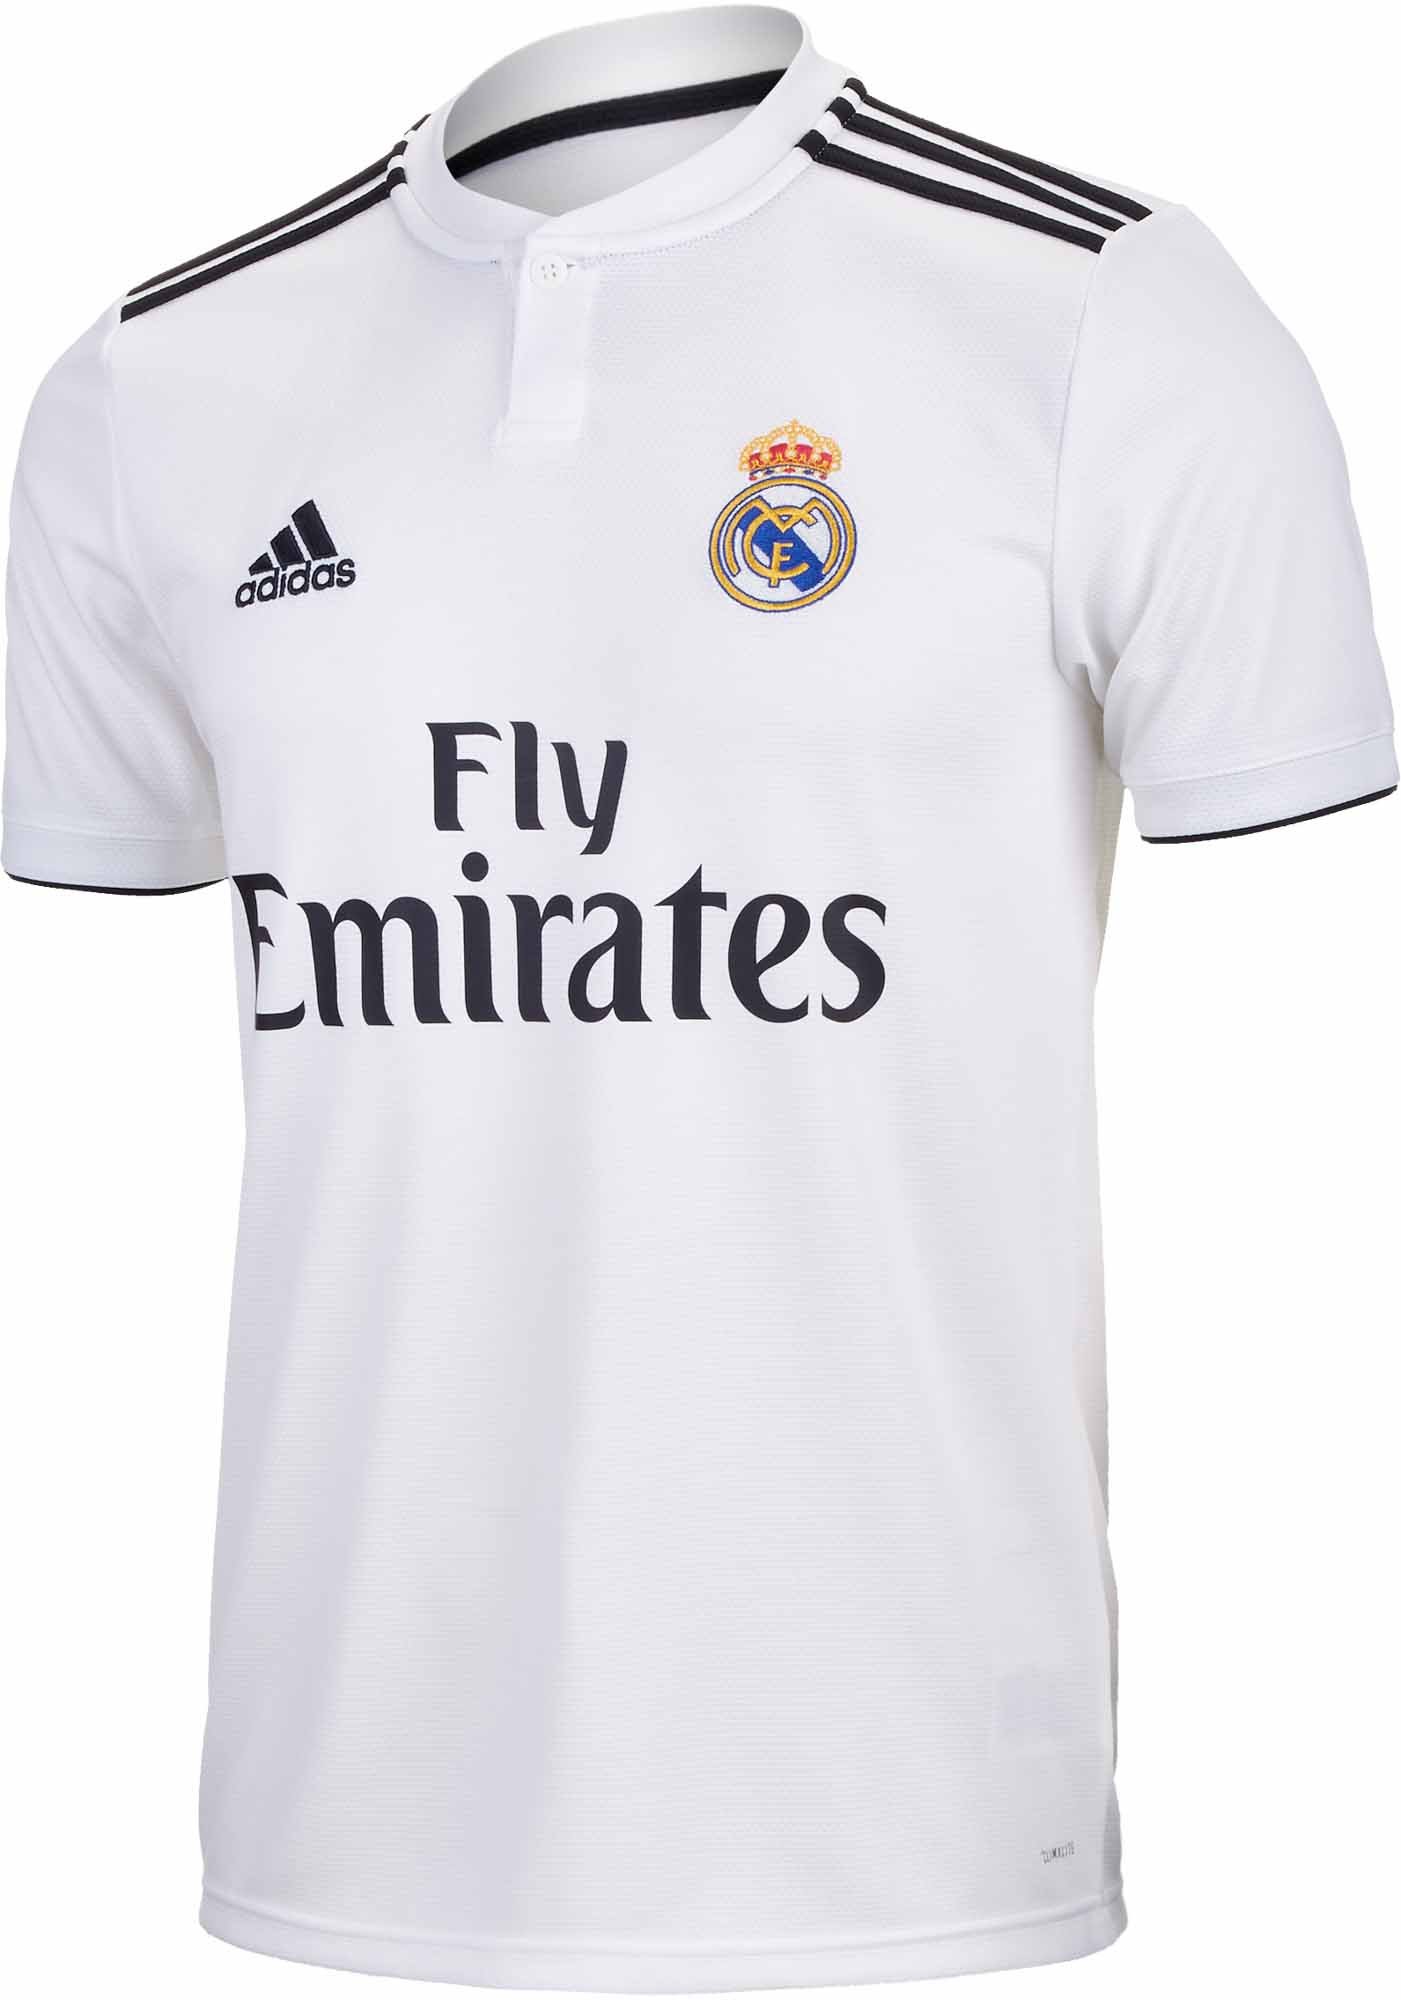 adidas Real Madrid Home Jersey 201819 SoccerPro